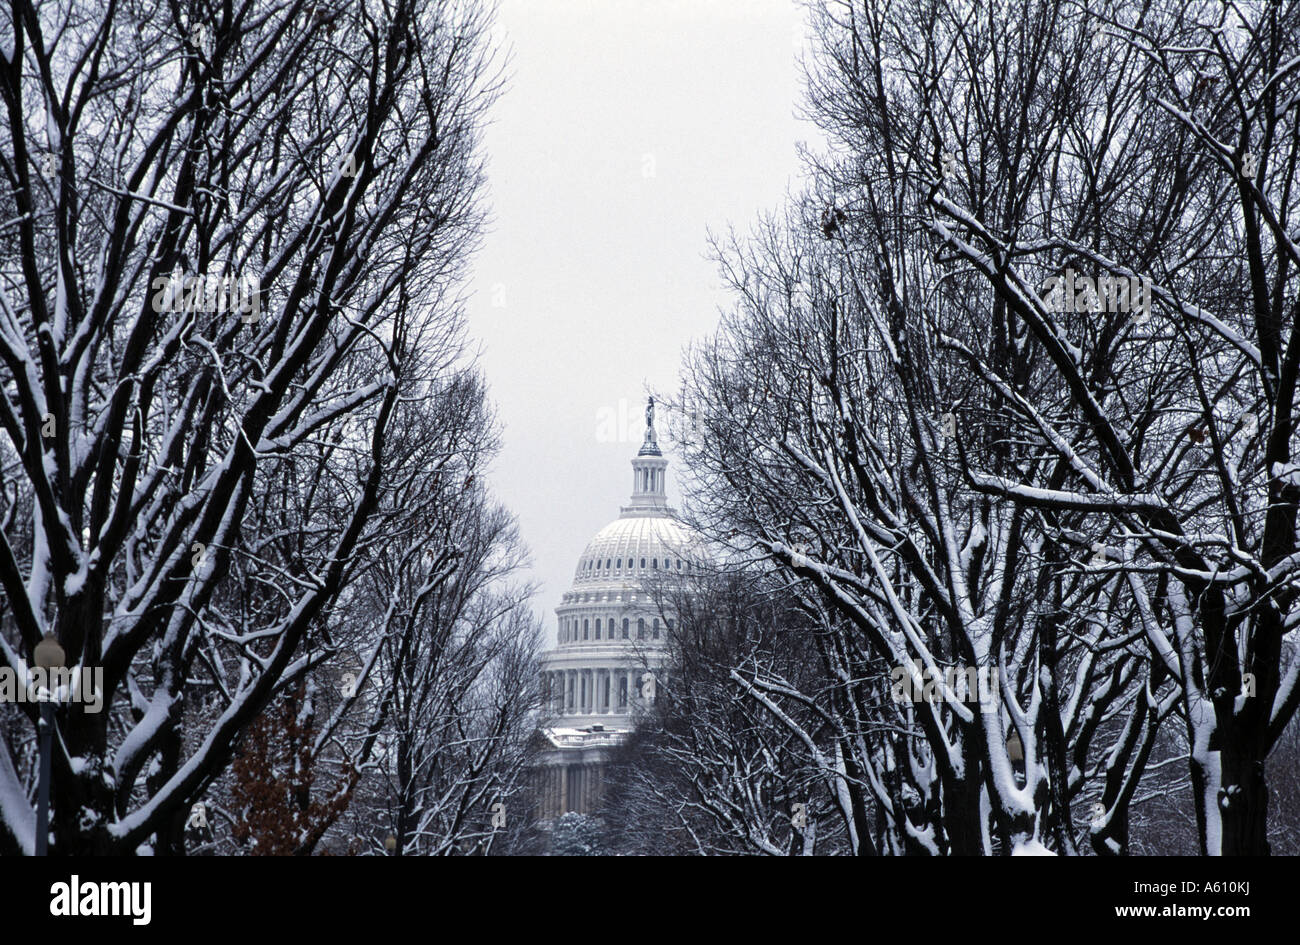 Dome of U.S. Capitol Building Washington, D.C. Stock Photo